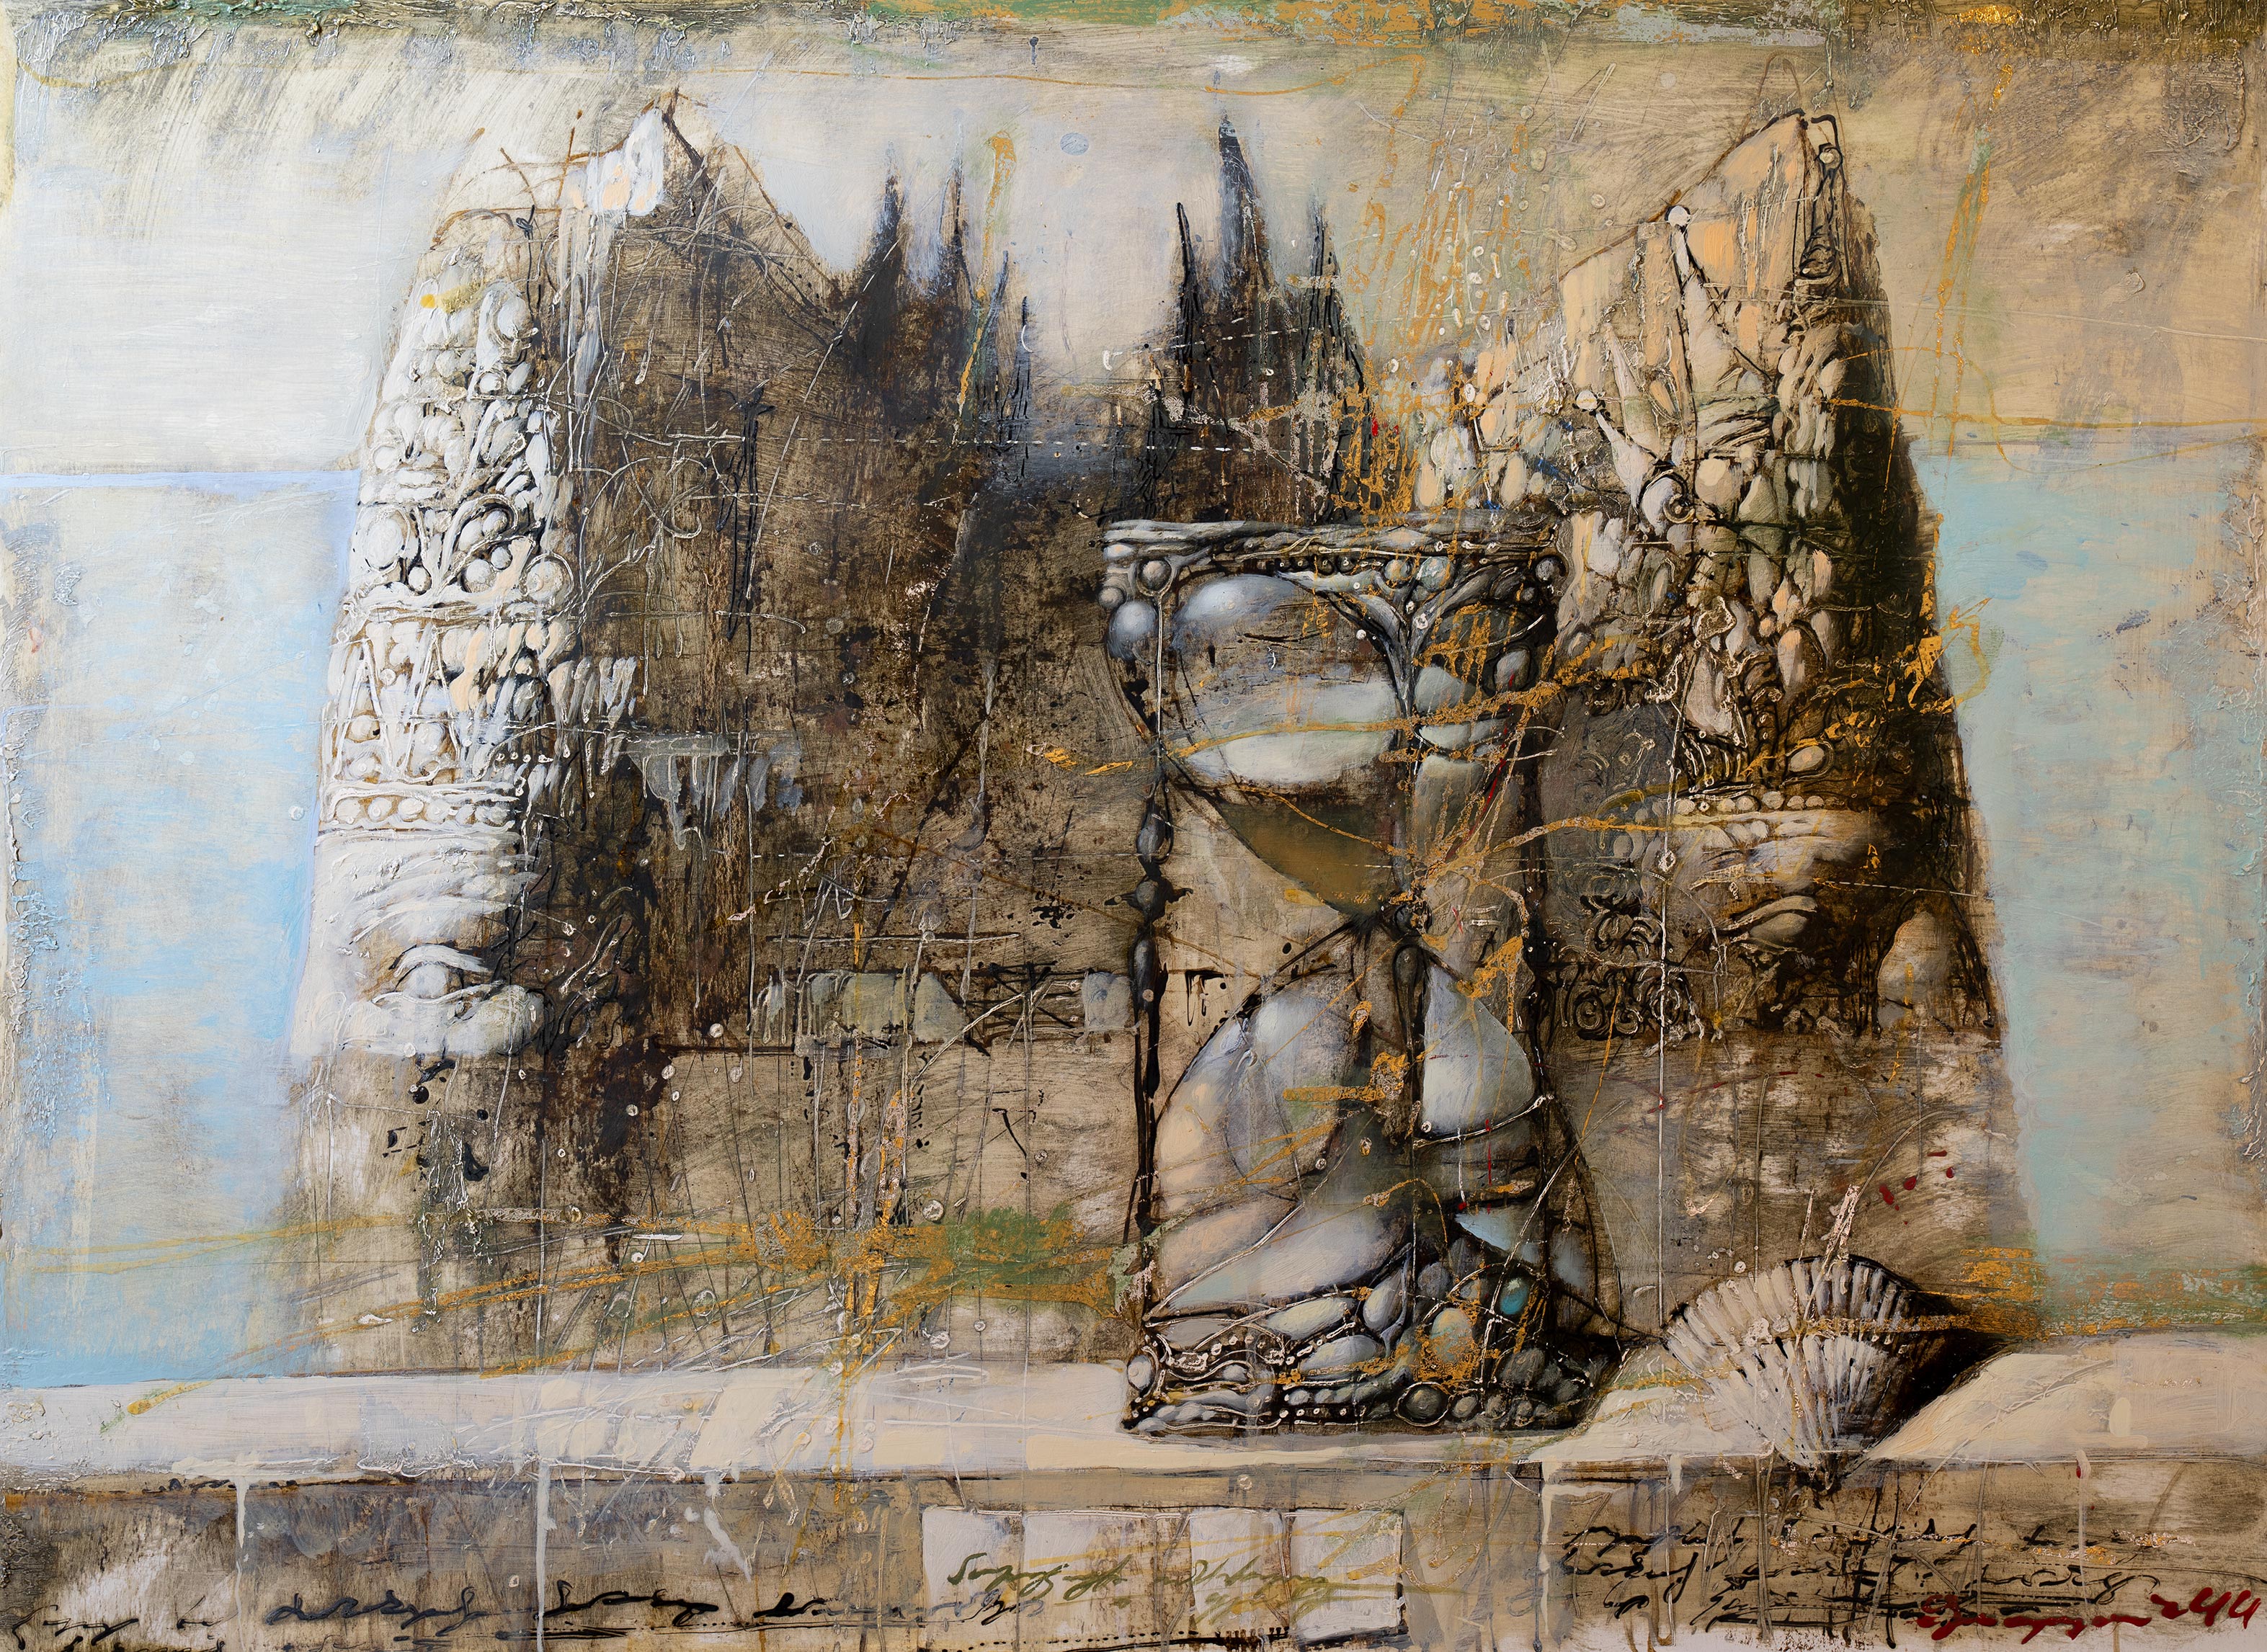 Island, Armen Gasparyan, Buy the painting Mixed media